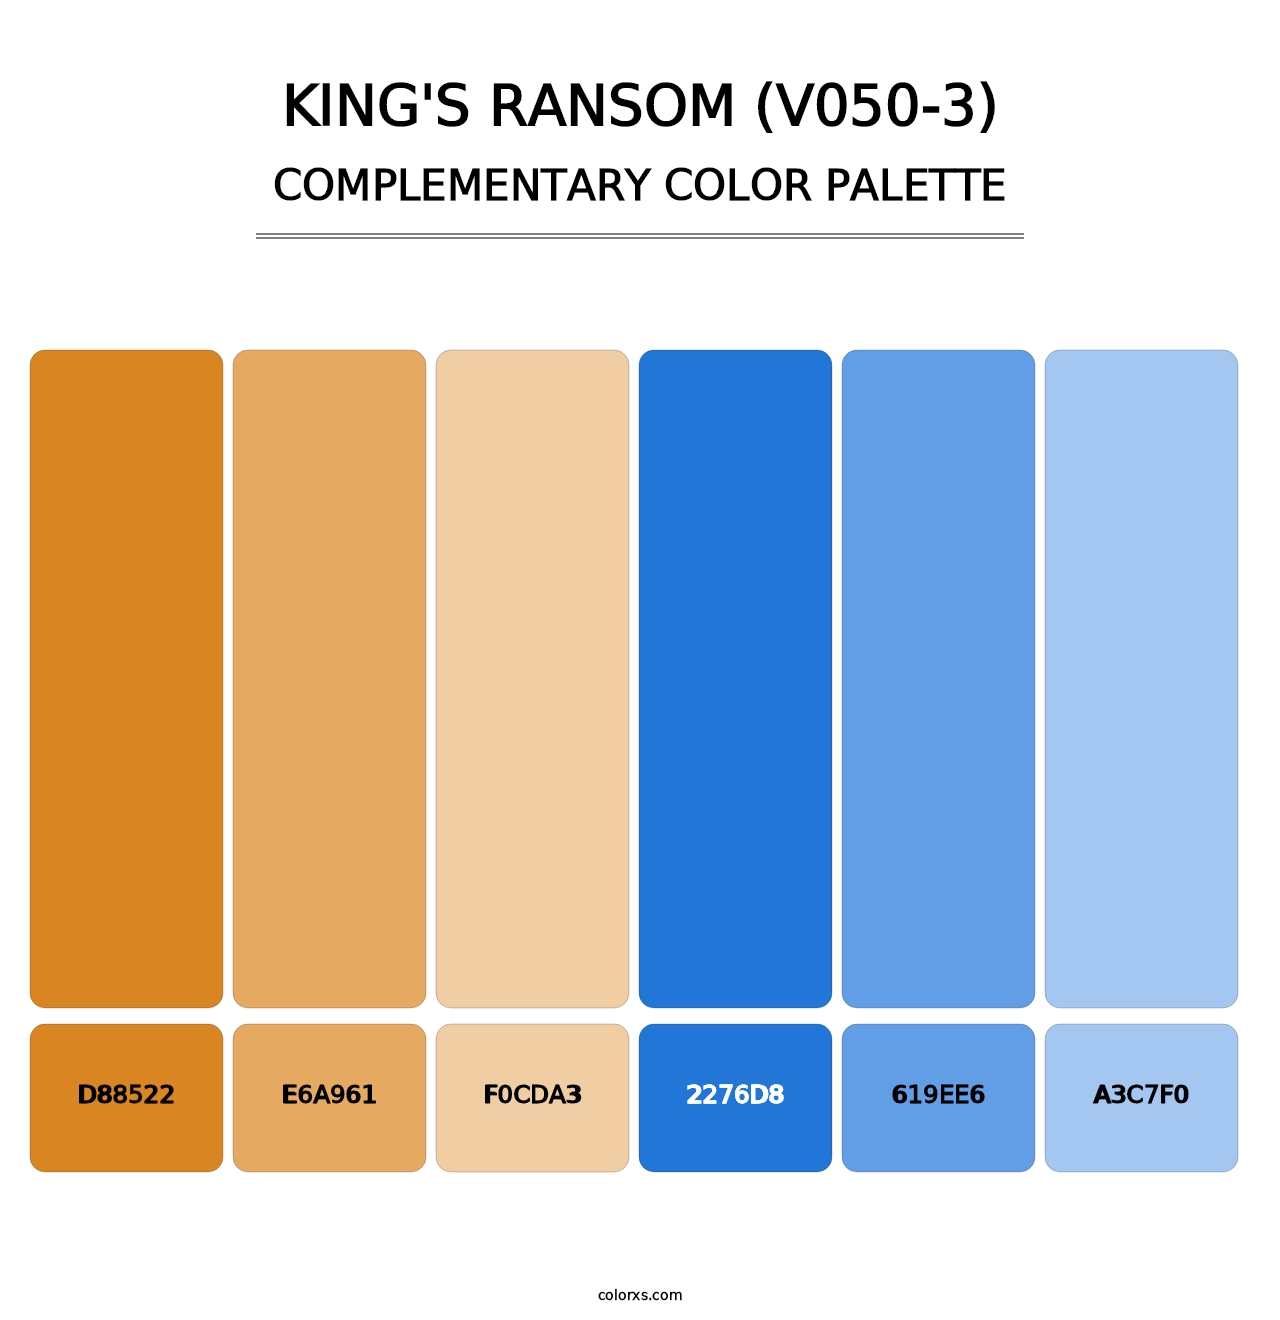 King's Ransom (V050-3) - Complementary Color Palette